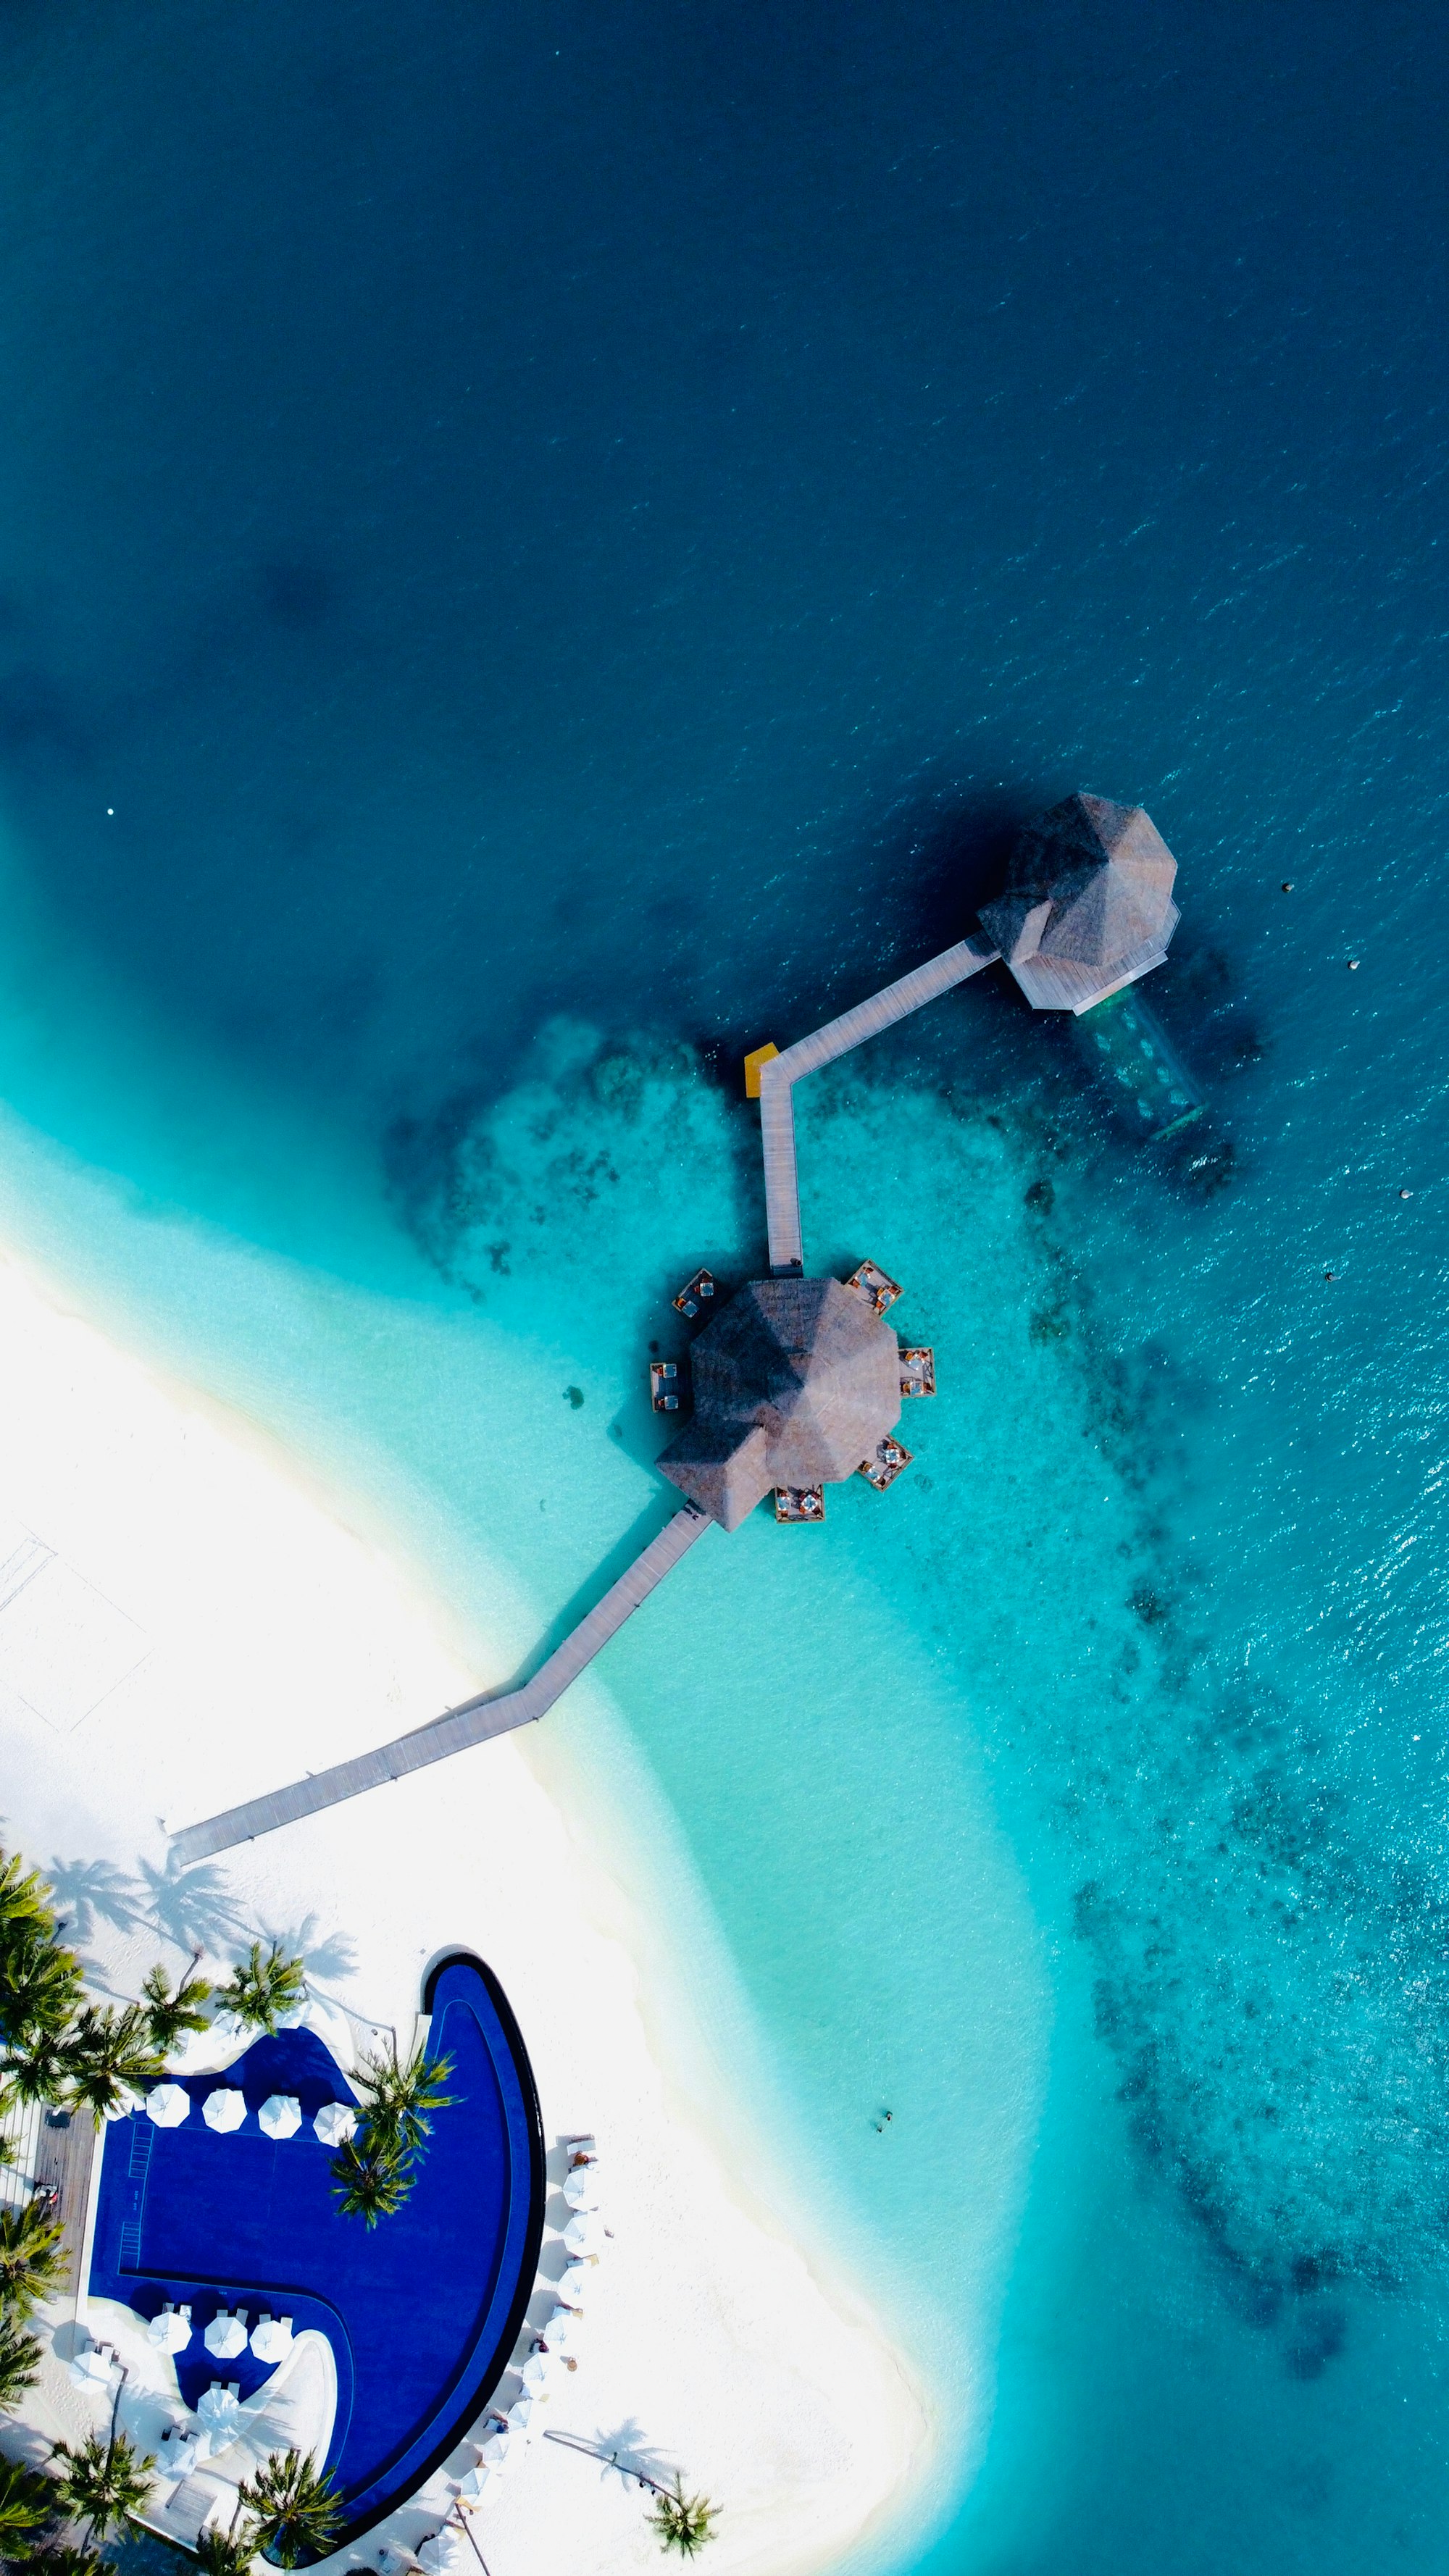 The Maldives - Conrad Rangali Islands! 👉🏻 Please credit my website: GlobalCareerBook.com 👈🏻